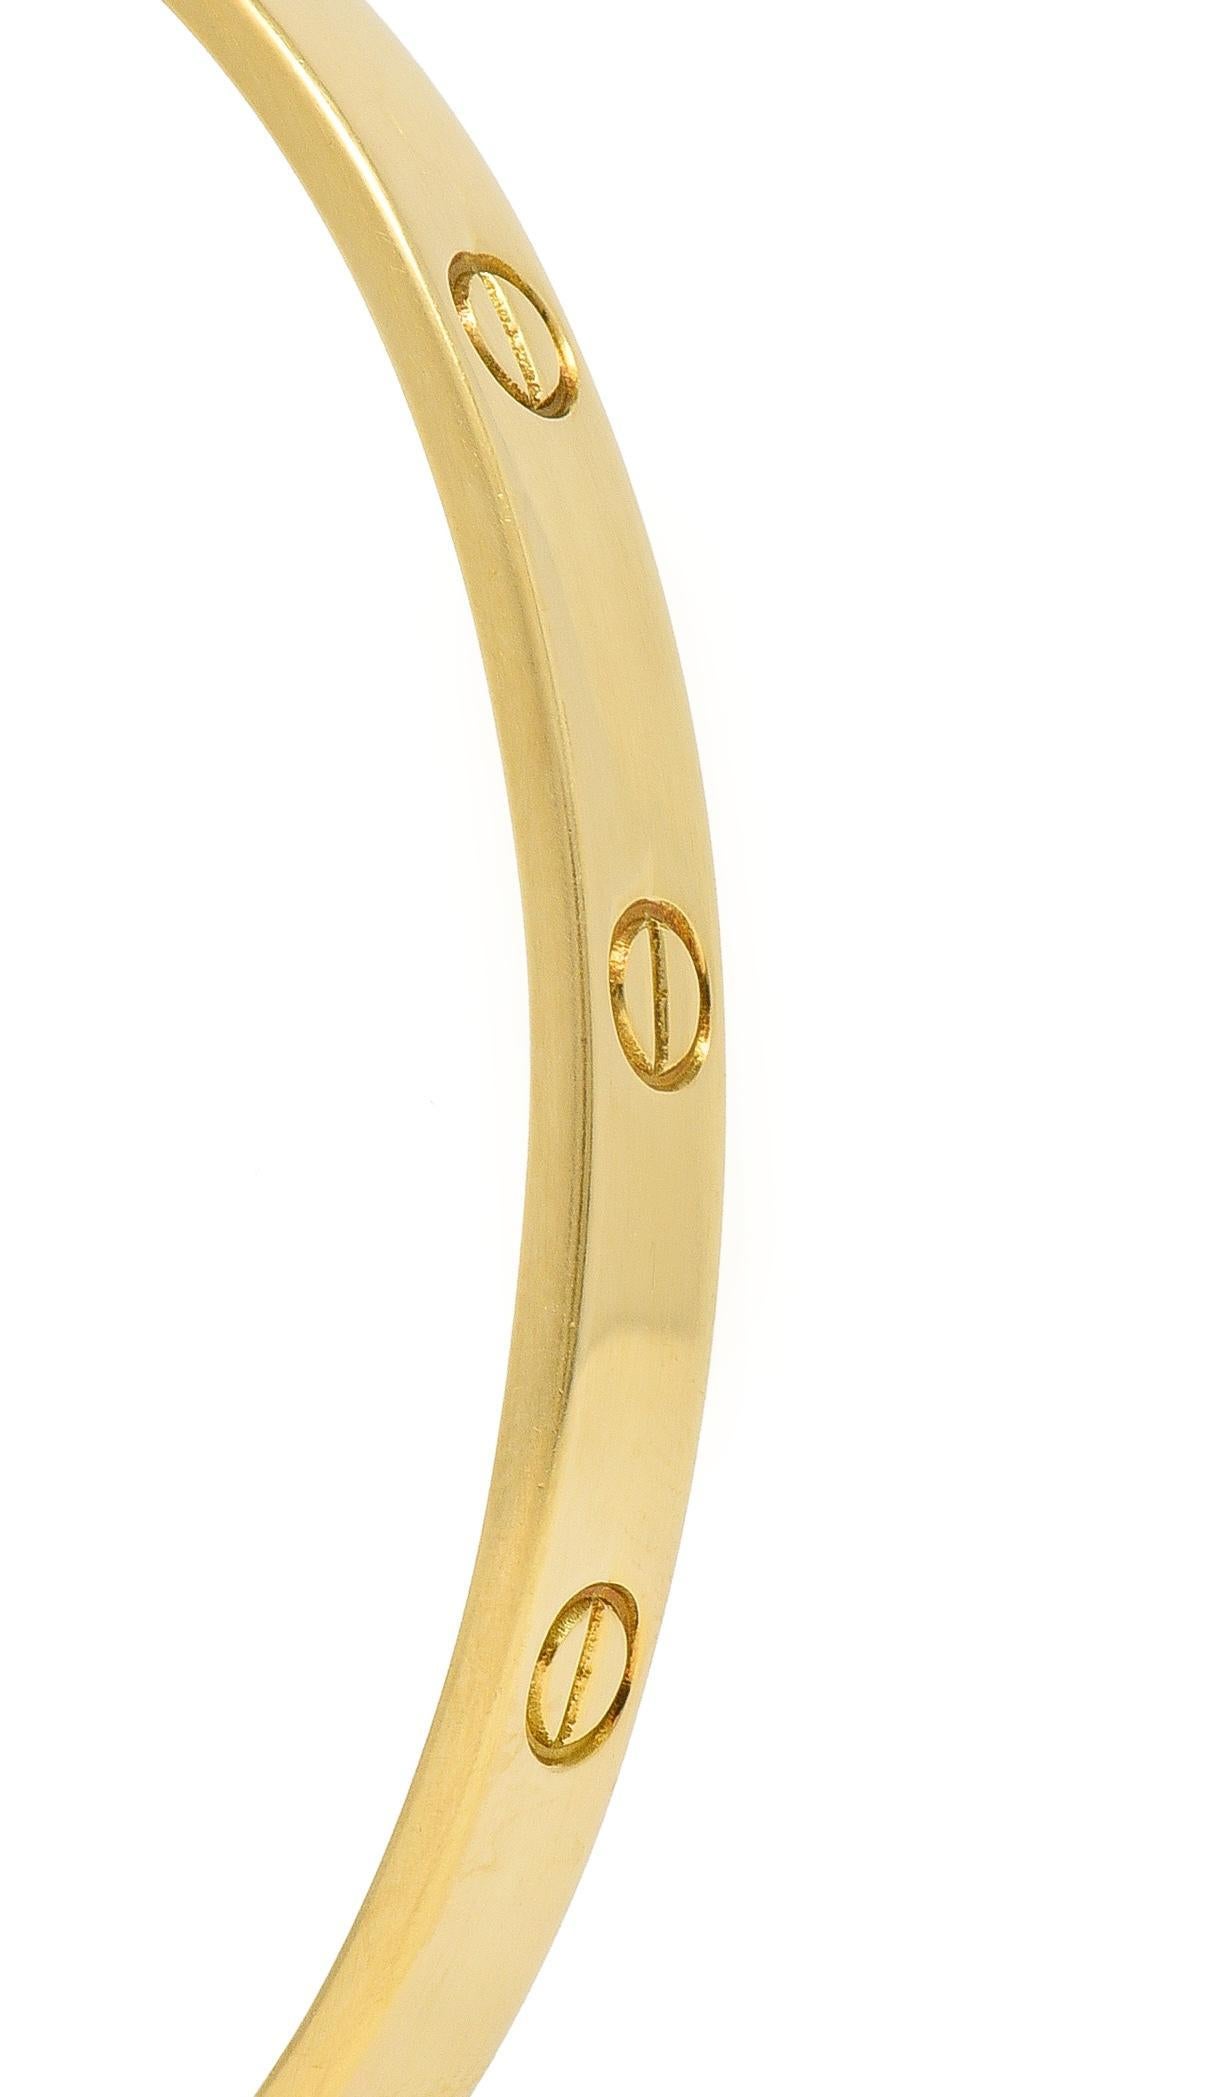 Cartier Aldo Cipullo 1970s 18 Karat Yellow Gold Love Bangle Bracelet For Sale 5